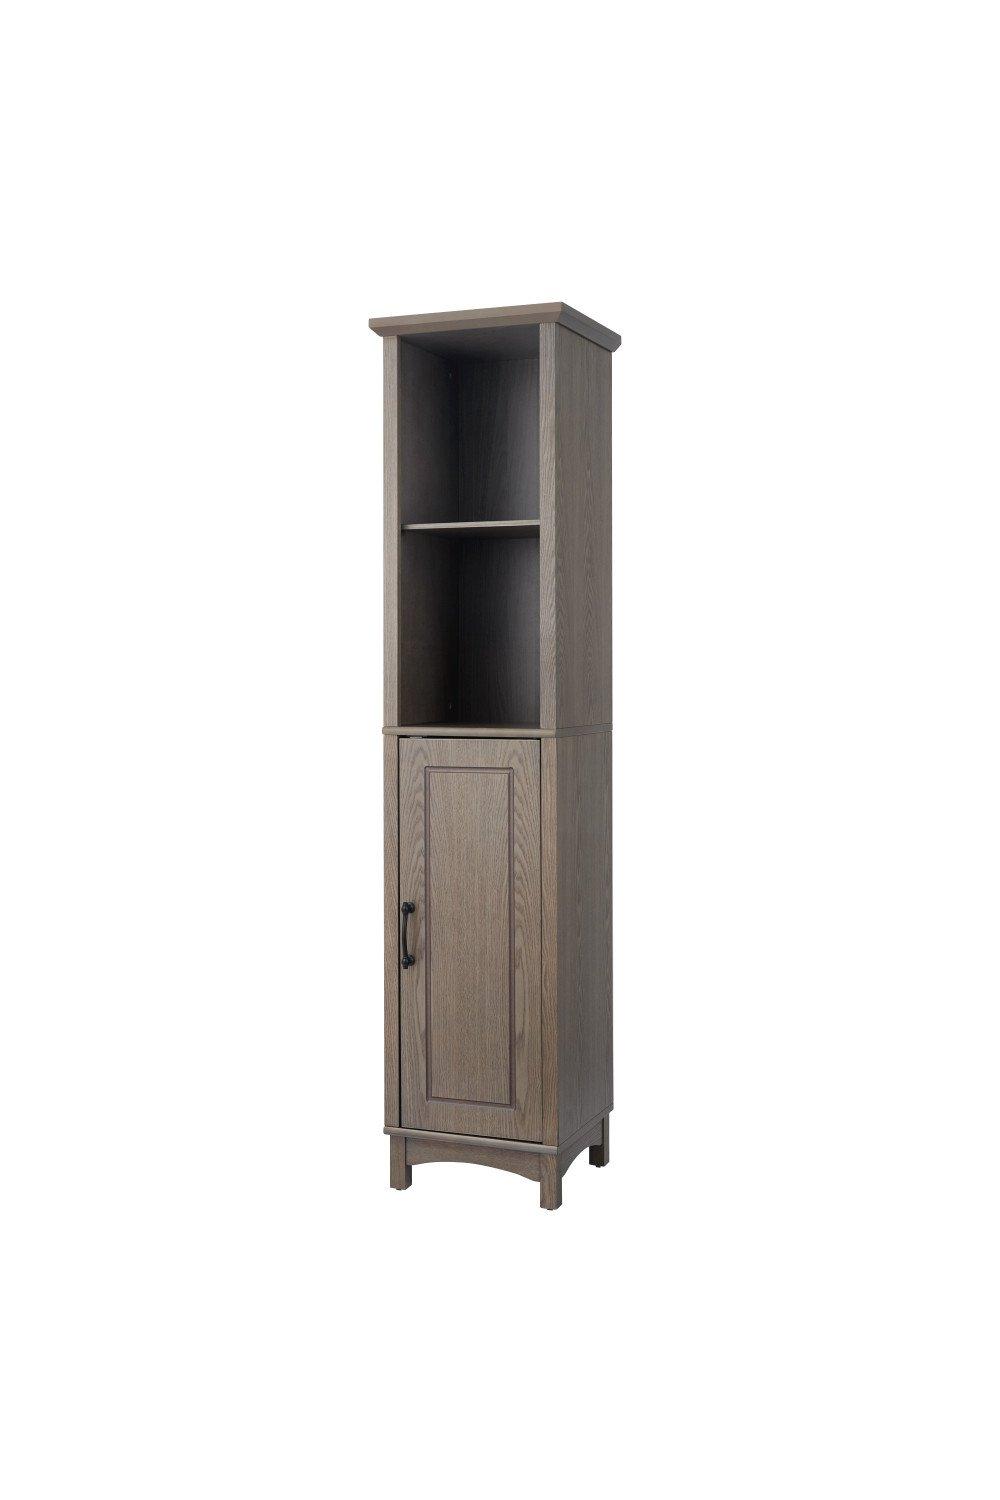 Russell Wooden Bathroom Linen Tower Storage Cabinet